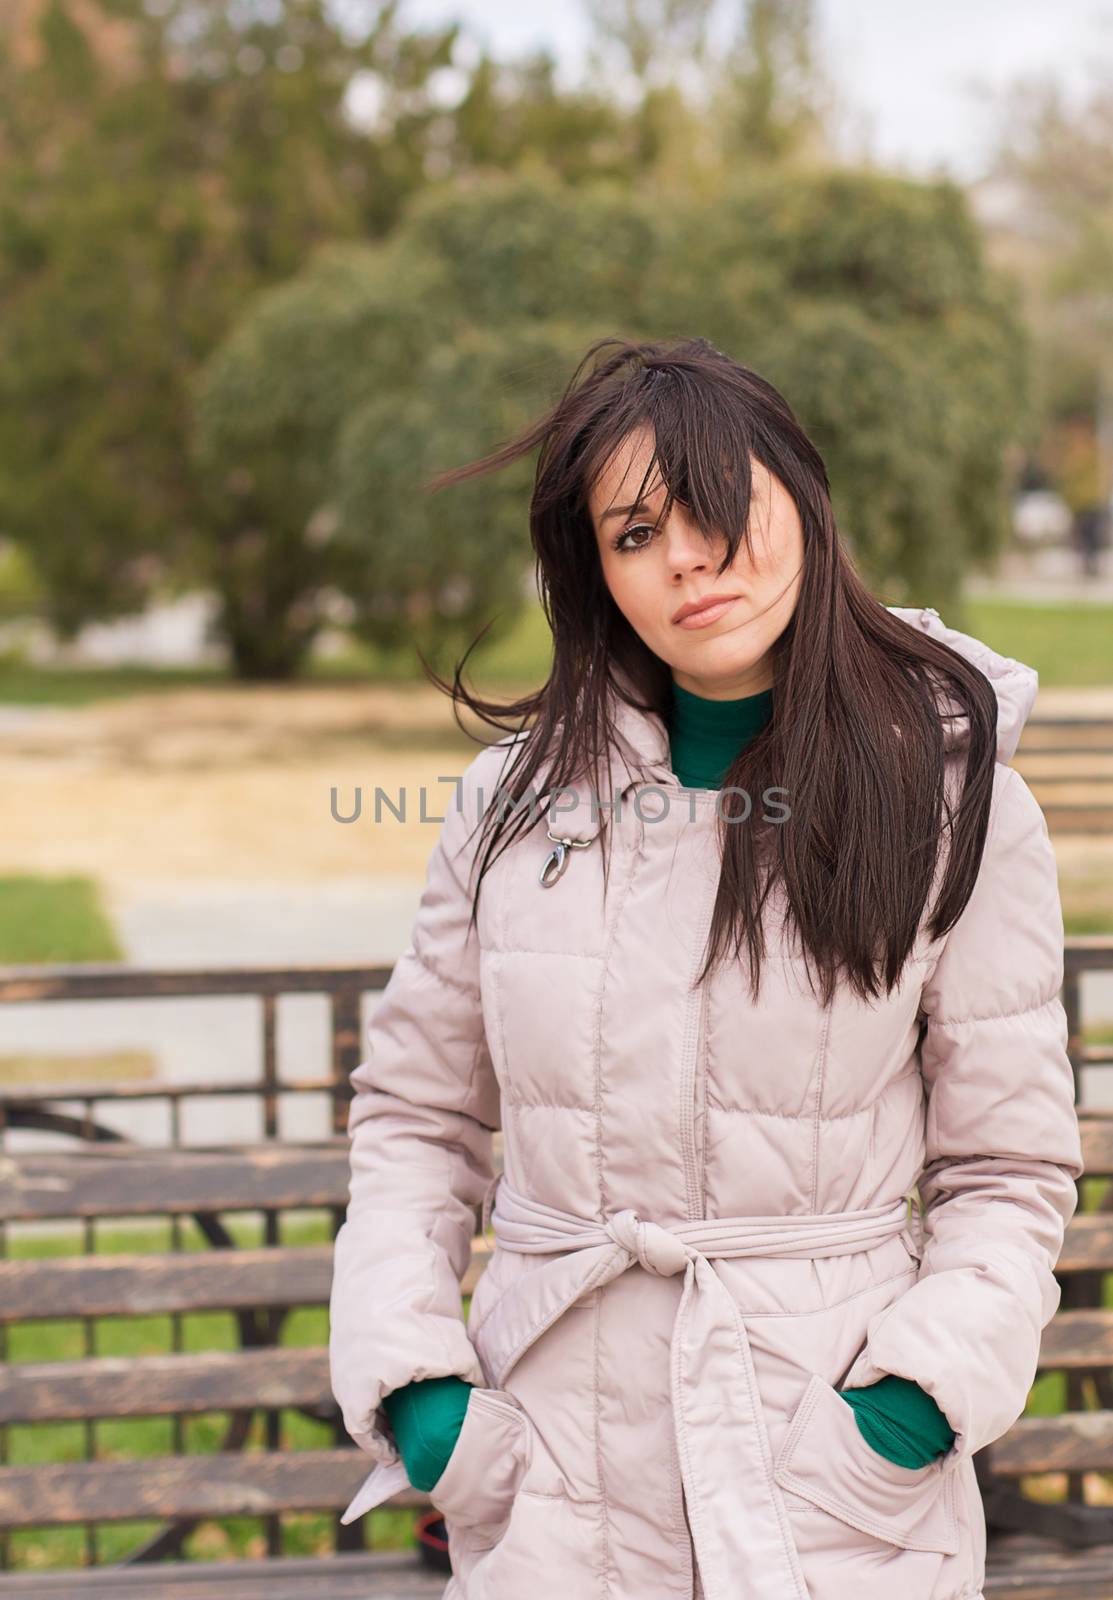 Portrait of pensive urban girl walking in city park